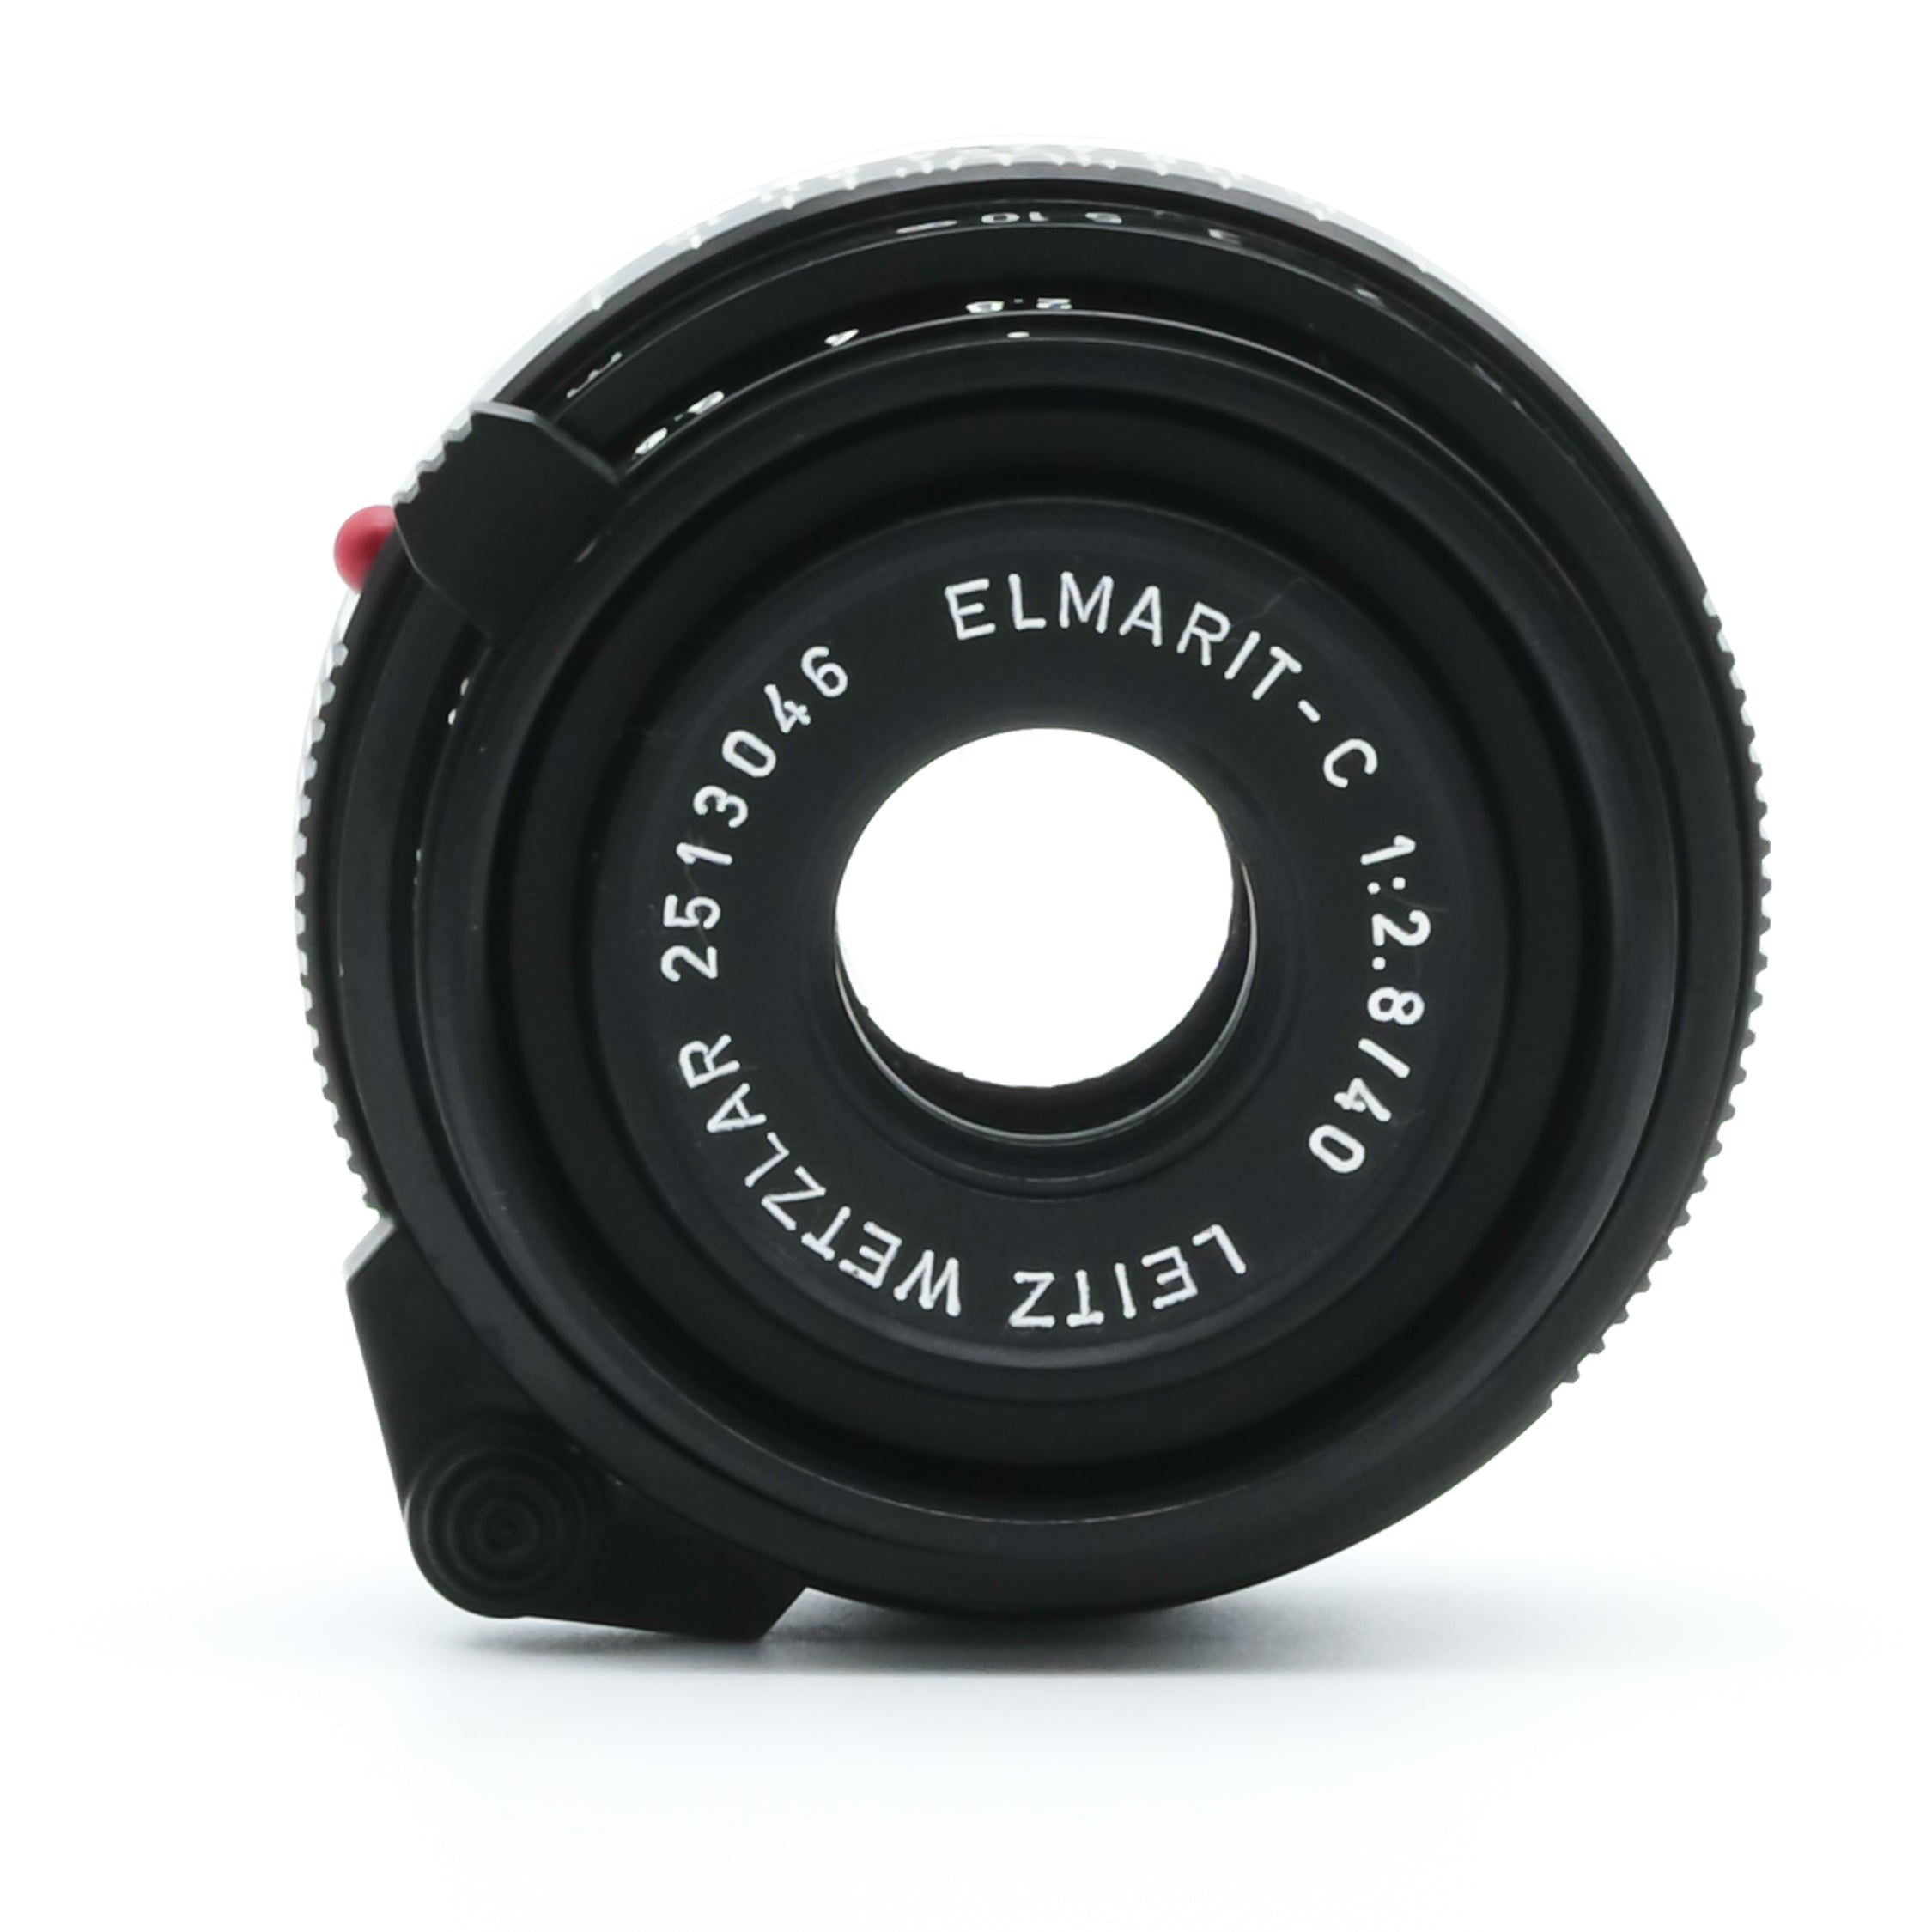 40mm f/2.8 Elmarit-C